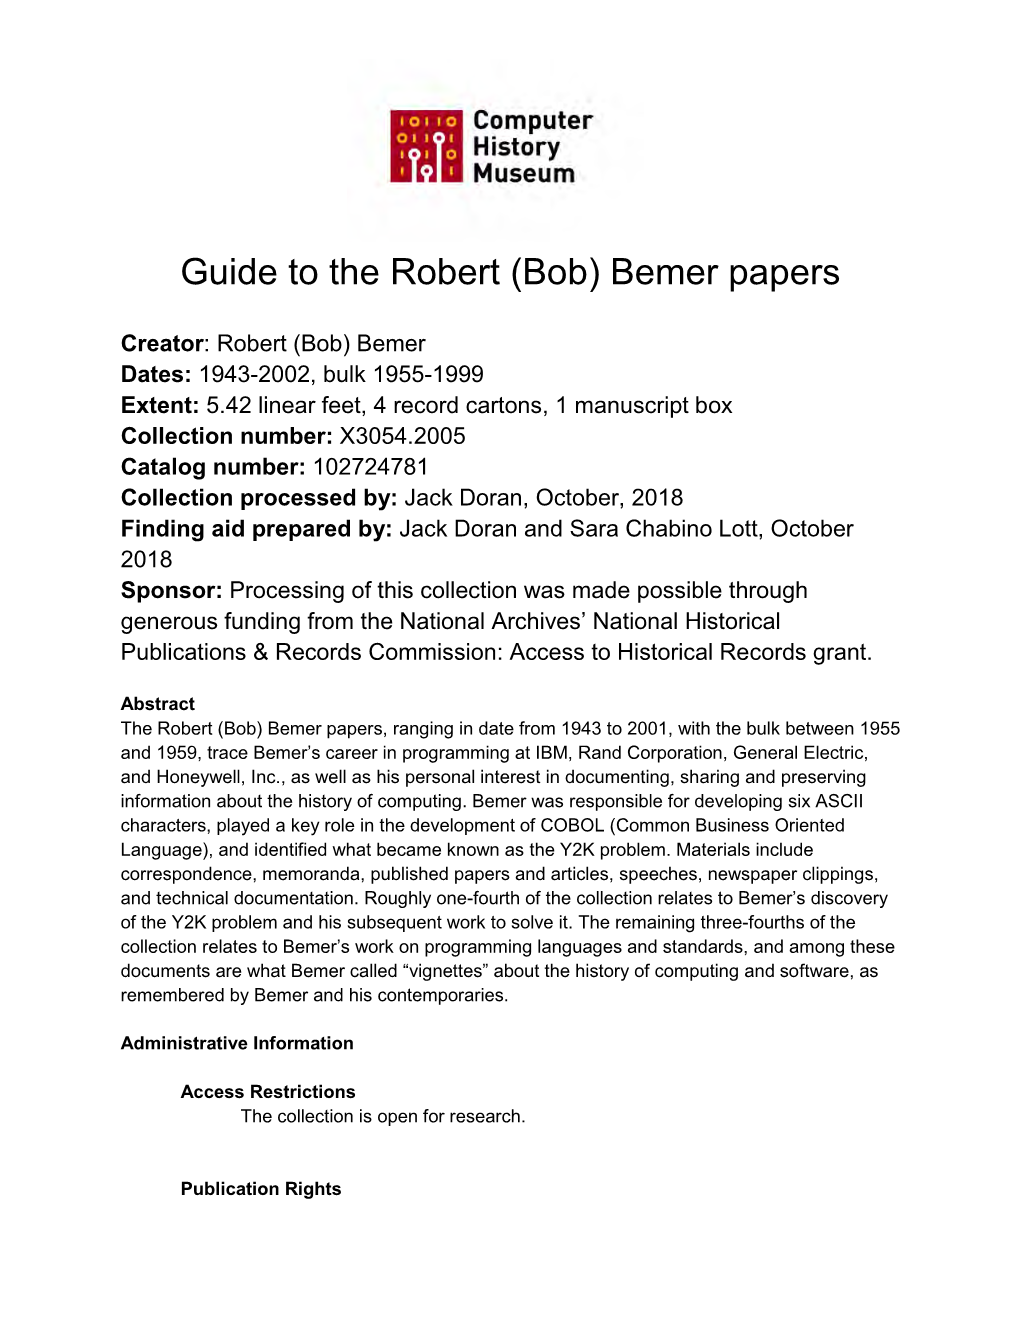 (Bob) Bemer Papers